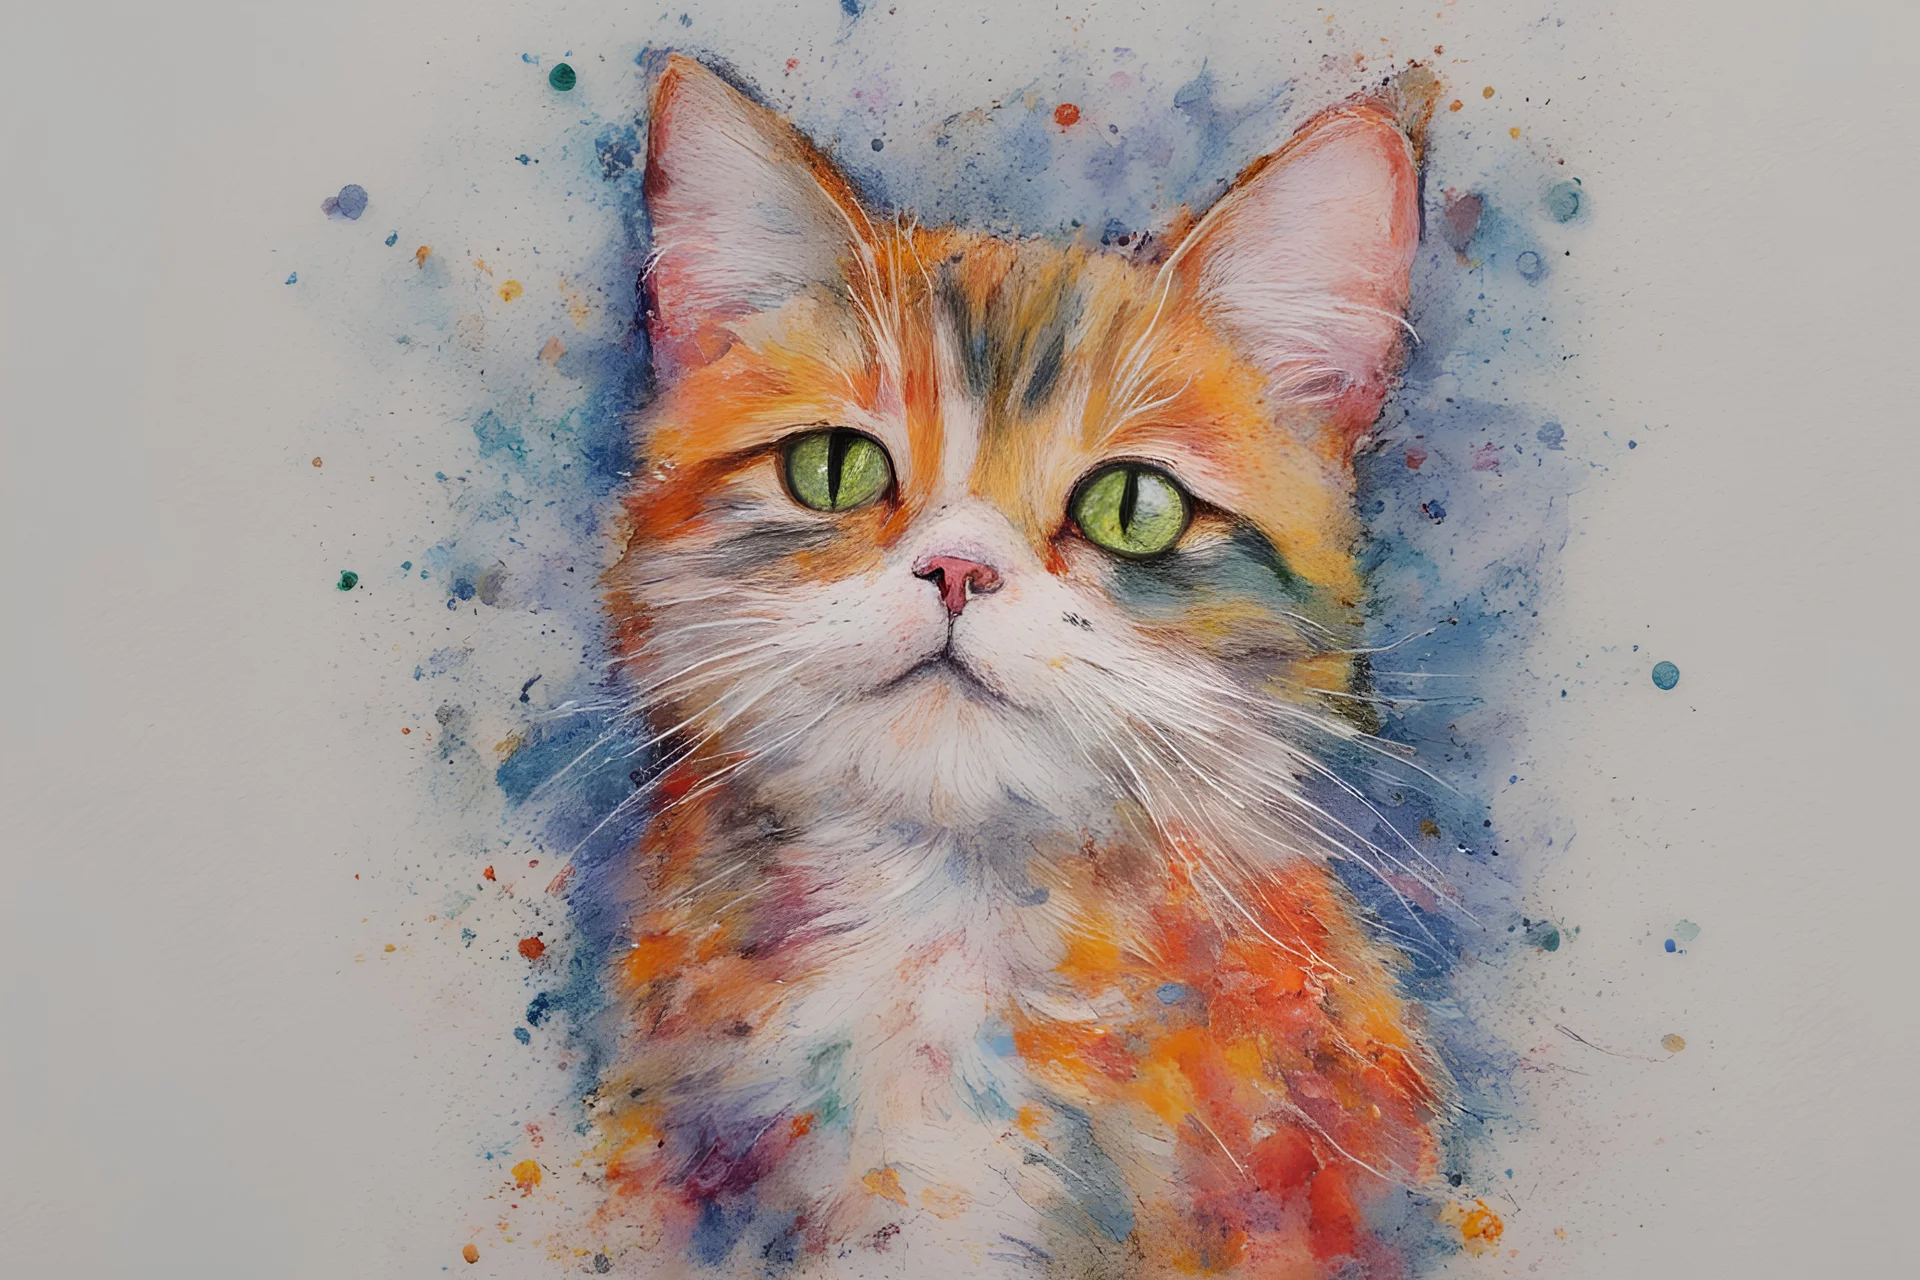 Whimsical crayon paintkng, à cat